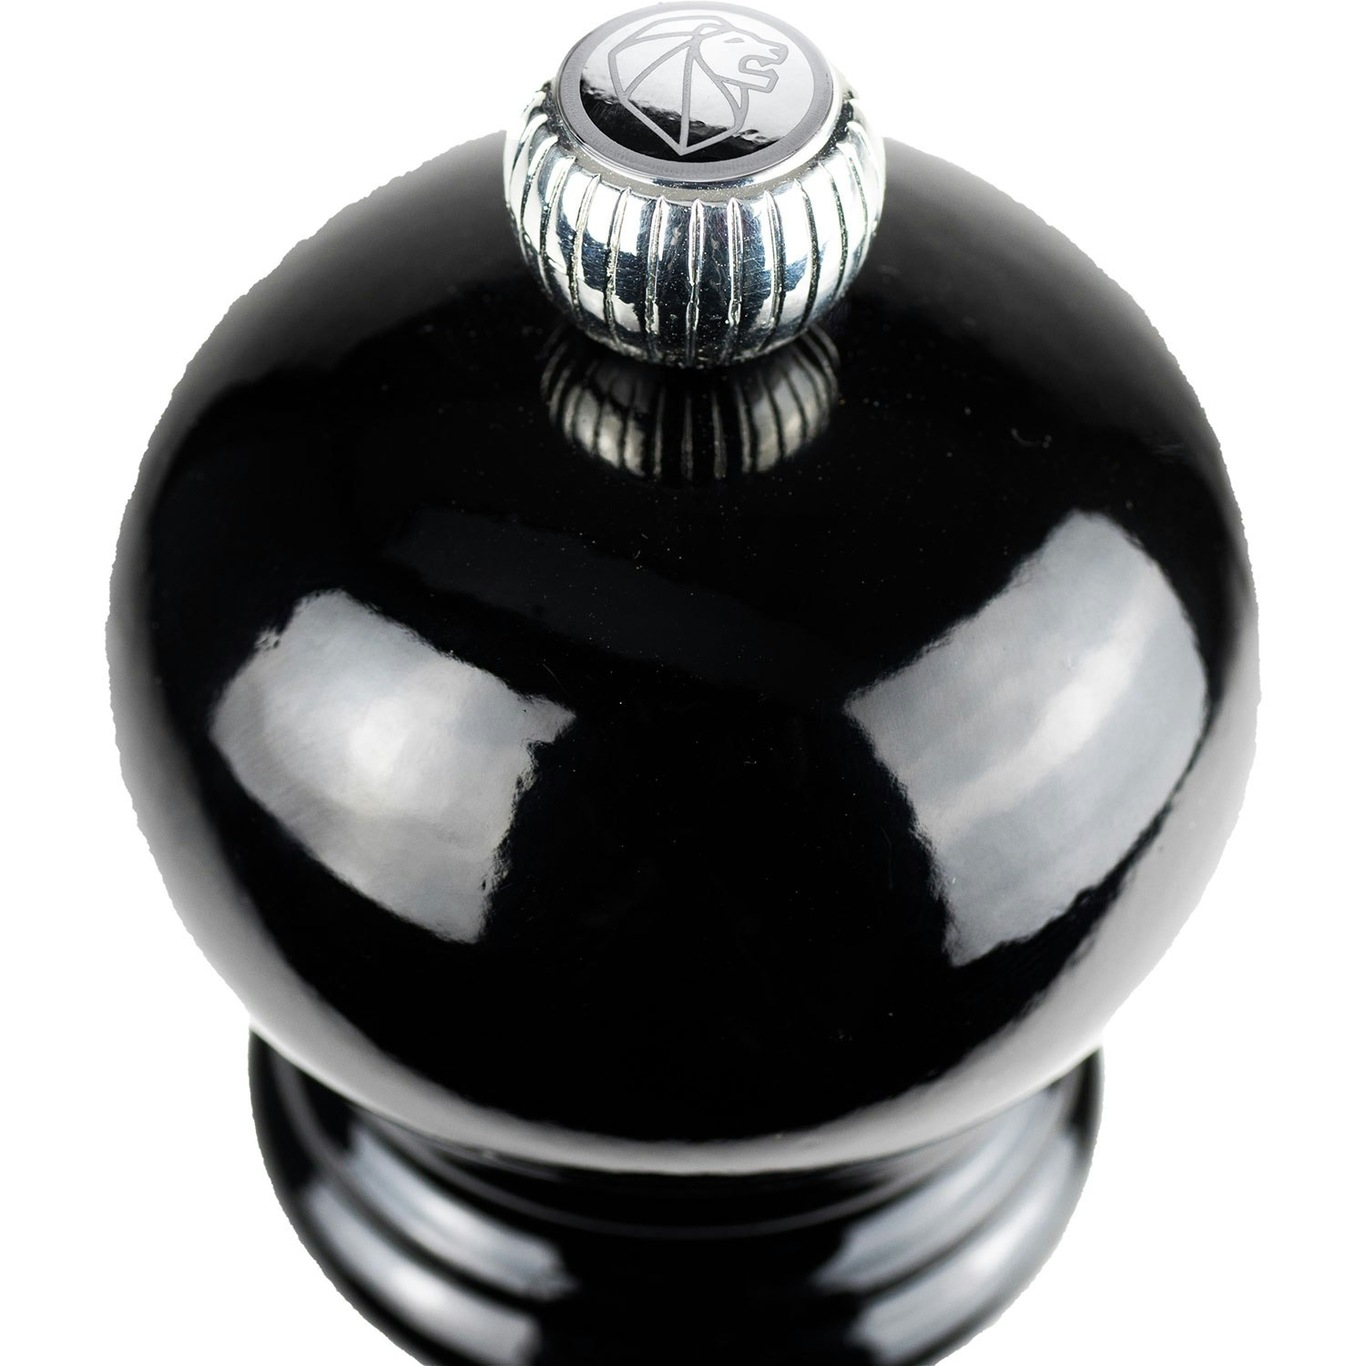 https://royaldesign.com/image/2/peugeot-paris-uselect-salt-and-pepper-mill-set-2-pack-18-cm-black-1?w=800&quality=80